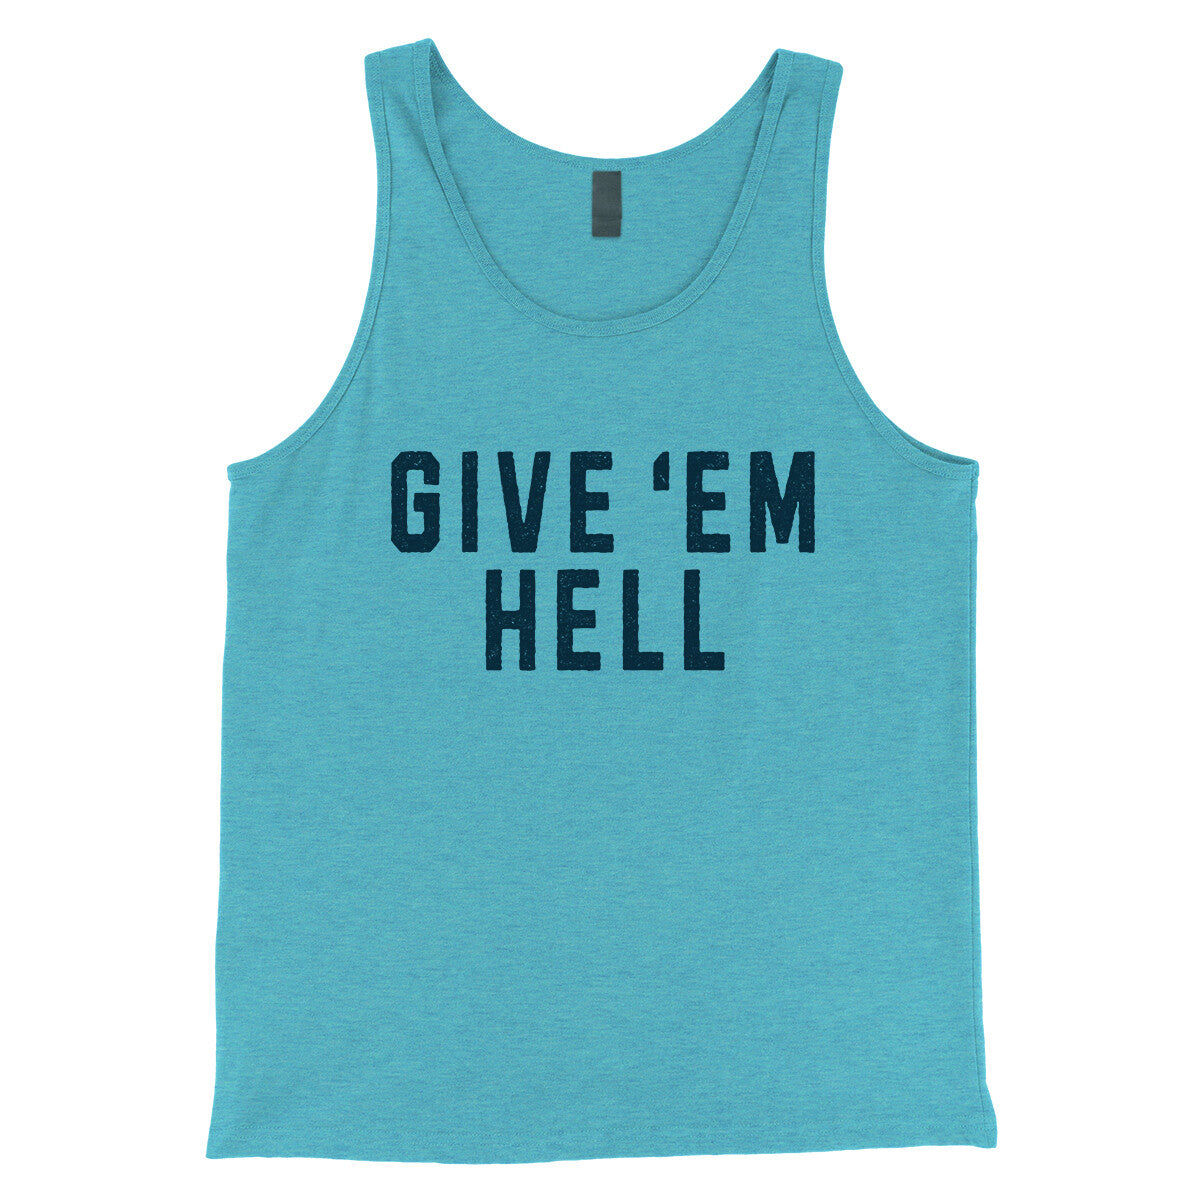 Give ‘em Hell in Aqua Triblend Color